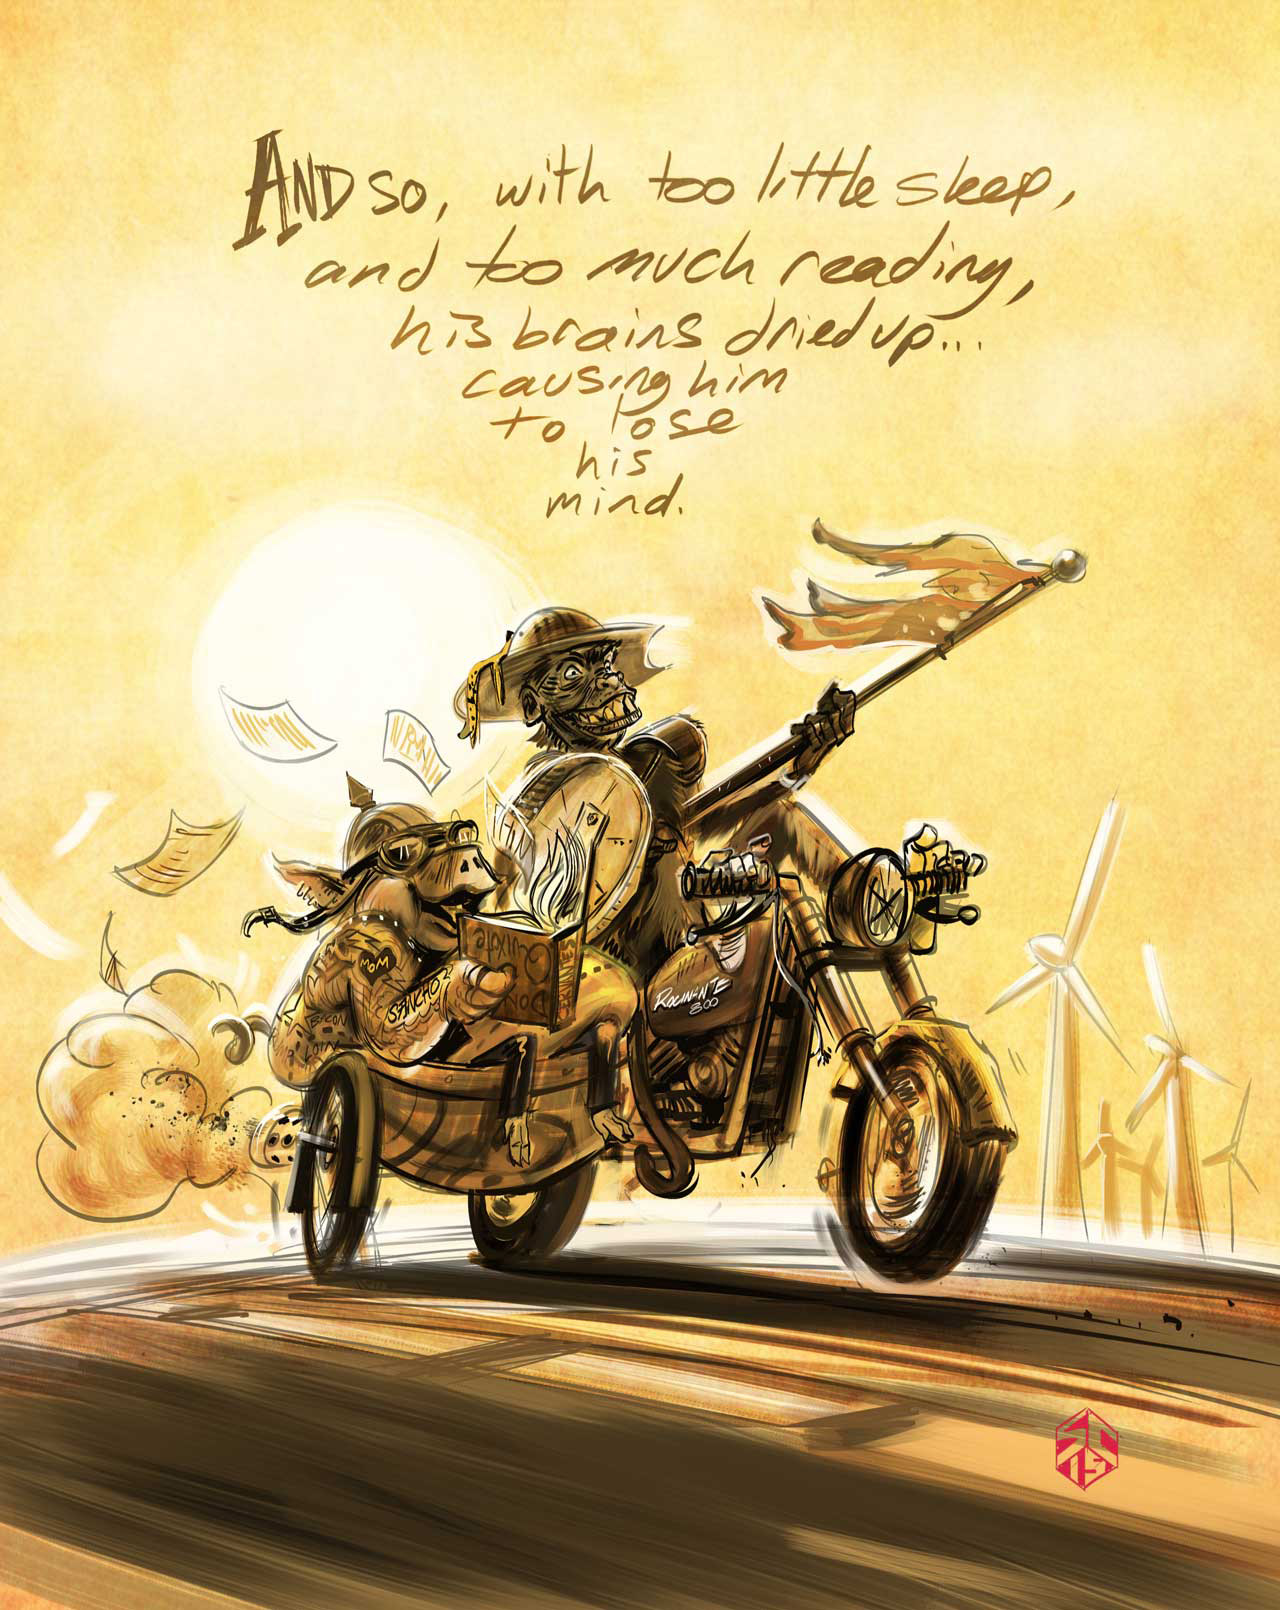 Steve Curcuru | "Don Quijote de la Mancha" by Miguel de Cervantes